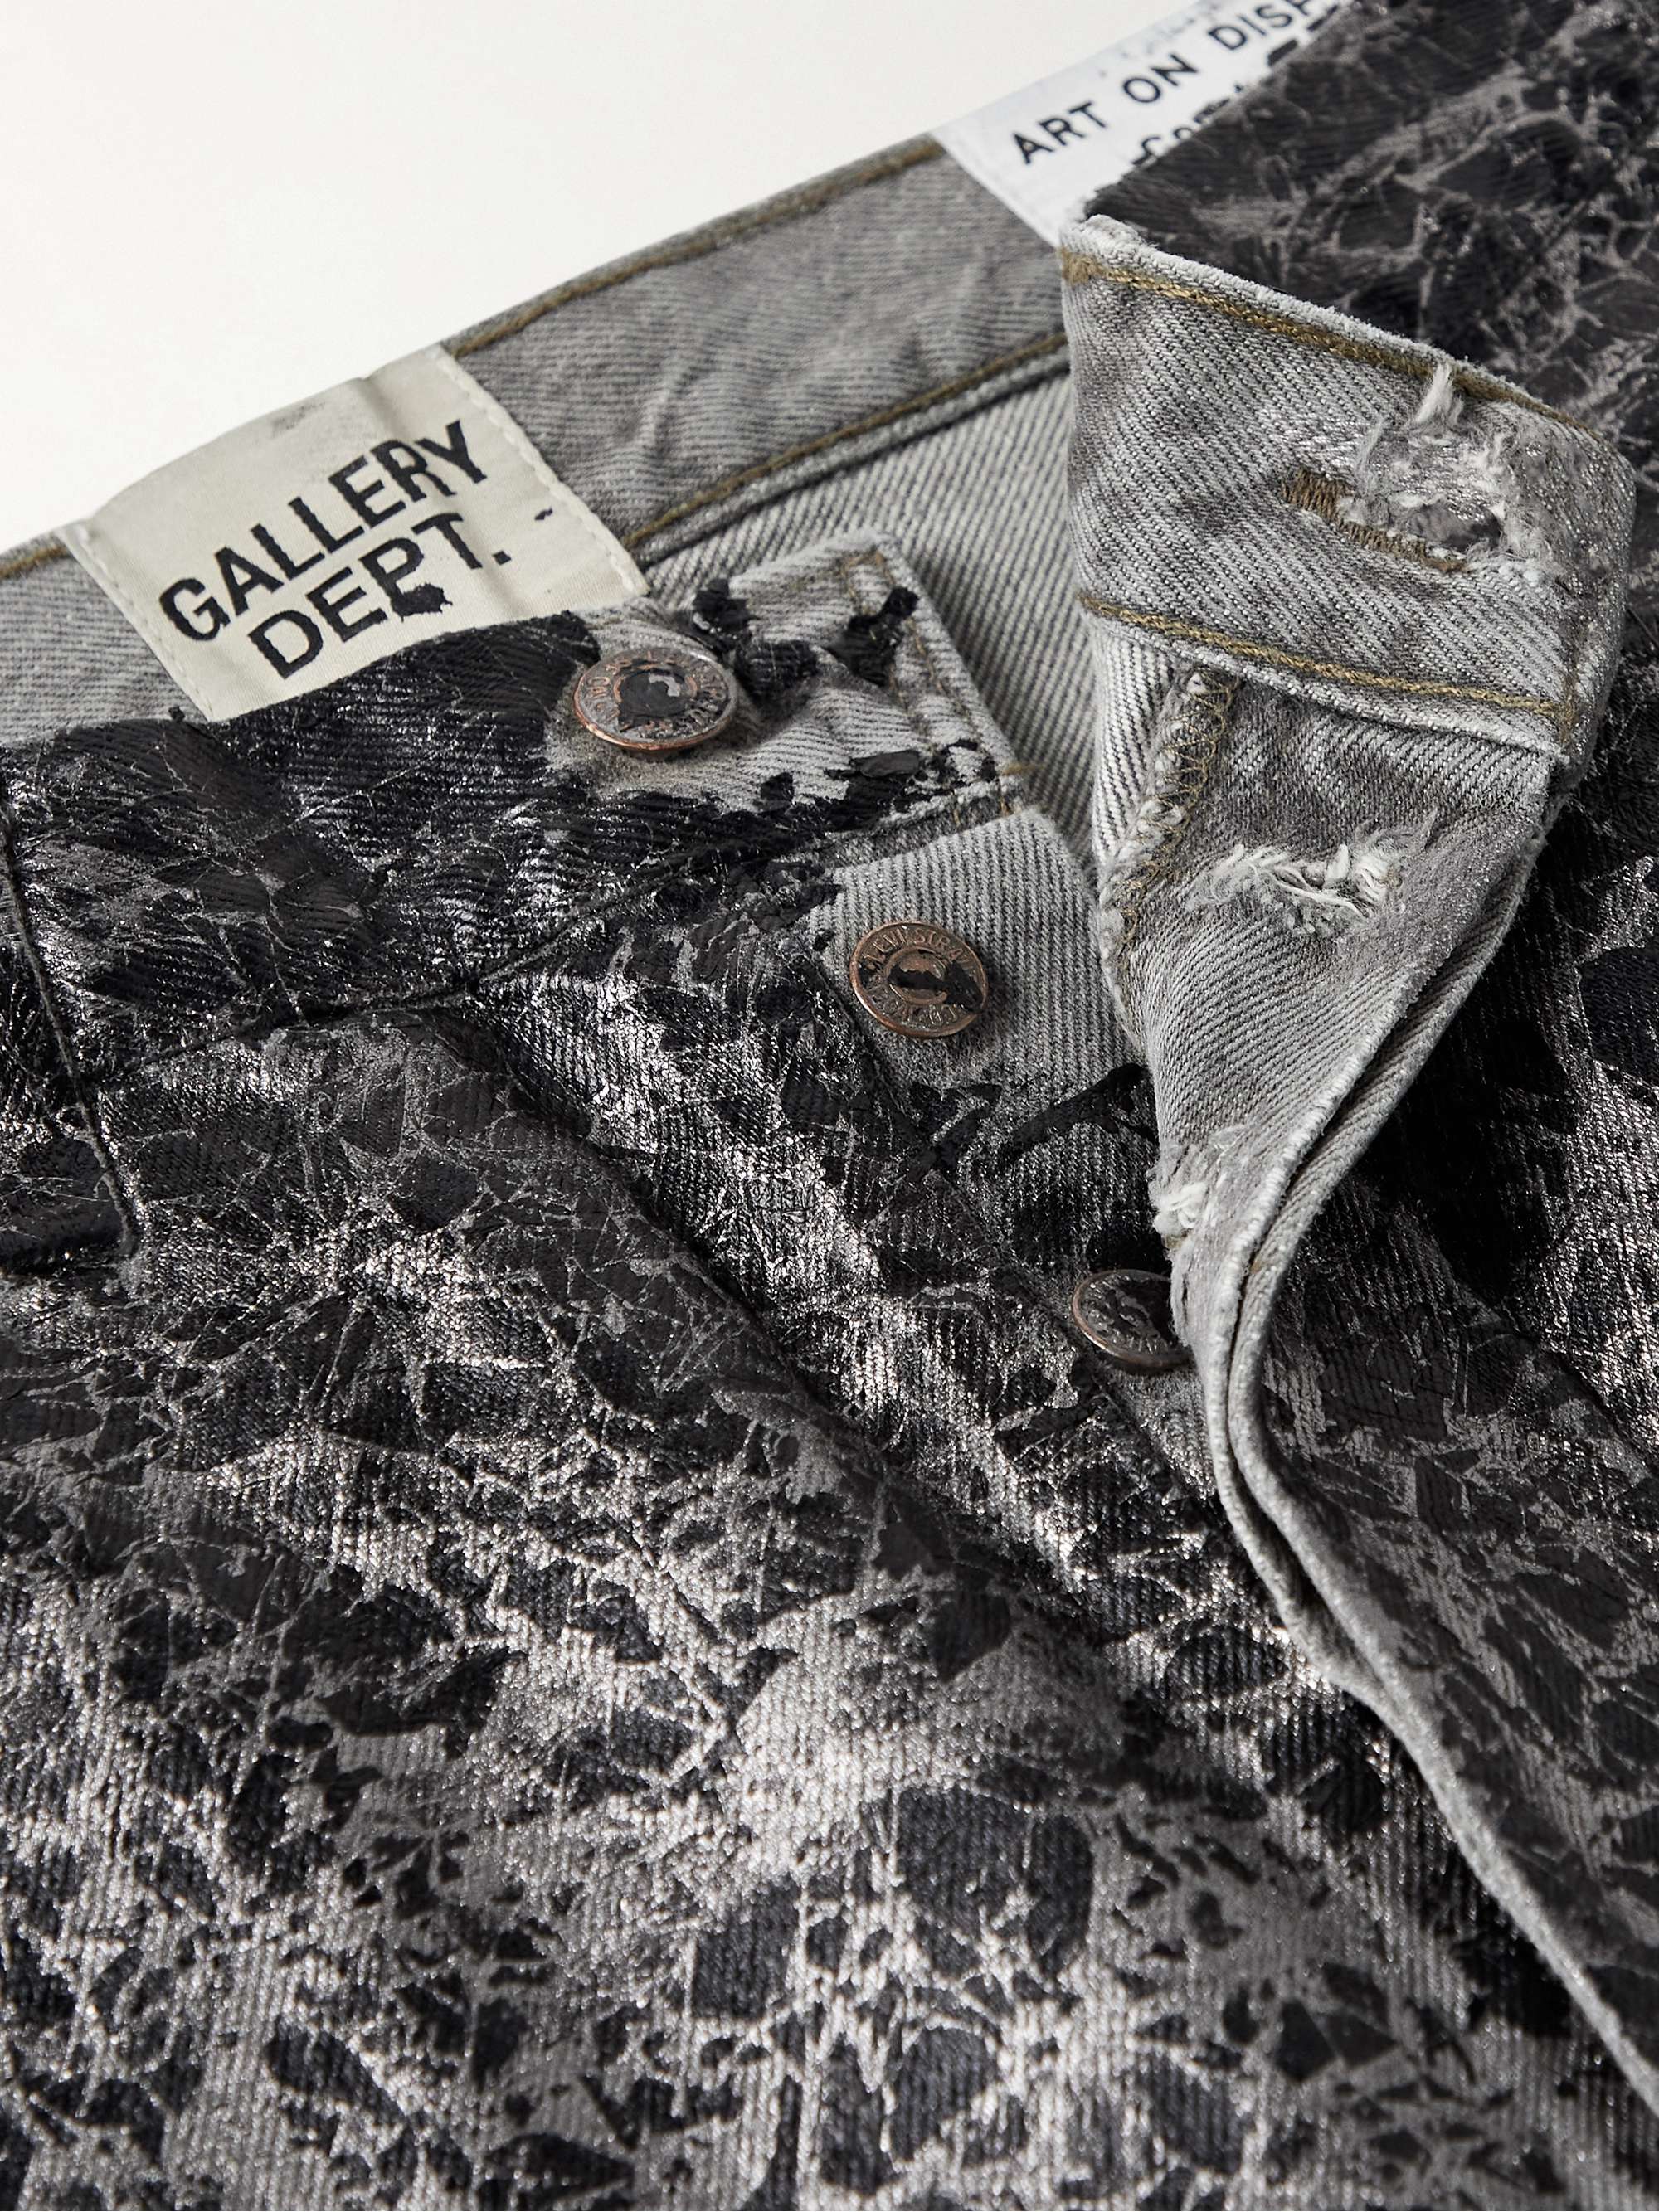 GALLERY DEPT. Analog 5001 Slim-Fit Metallic Painted Jeans